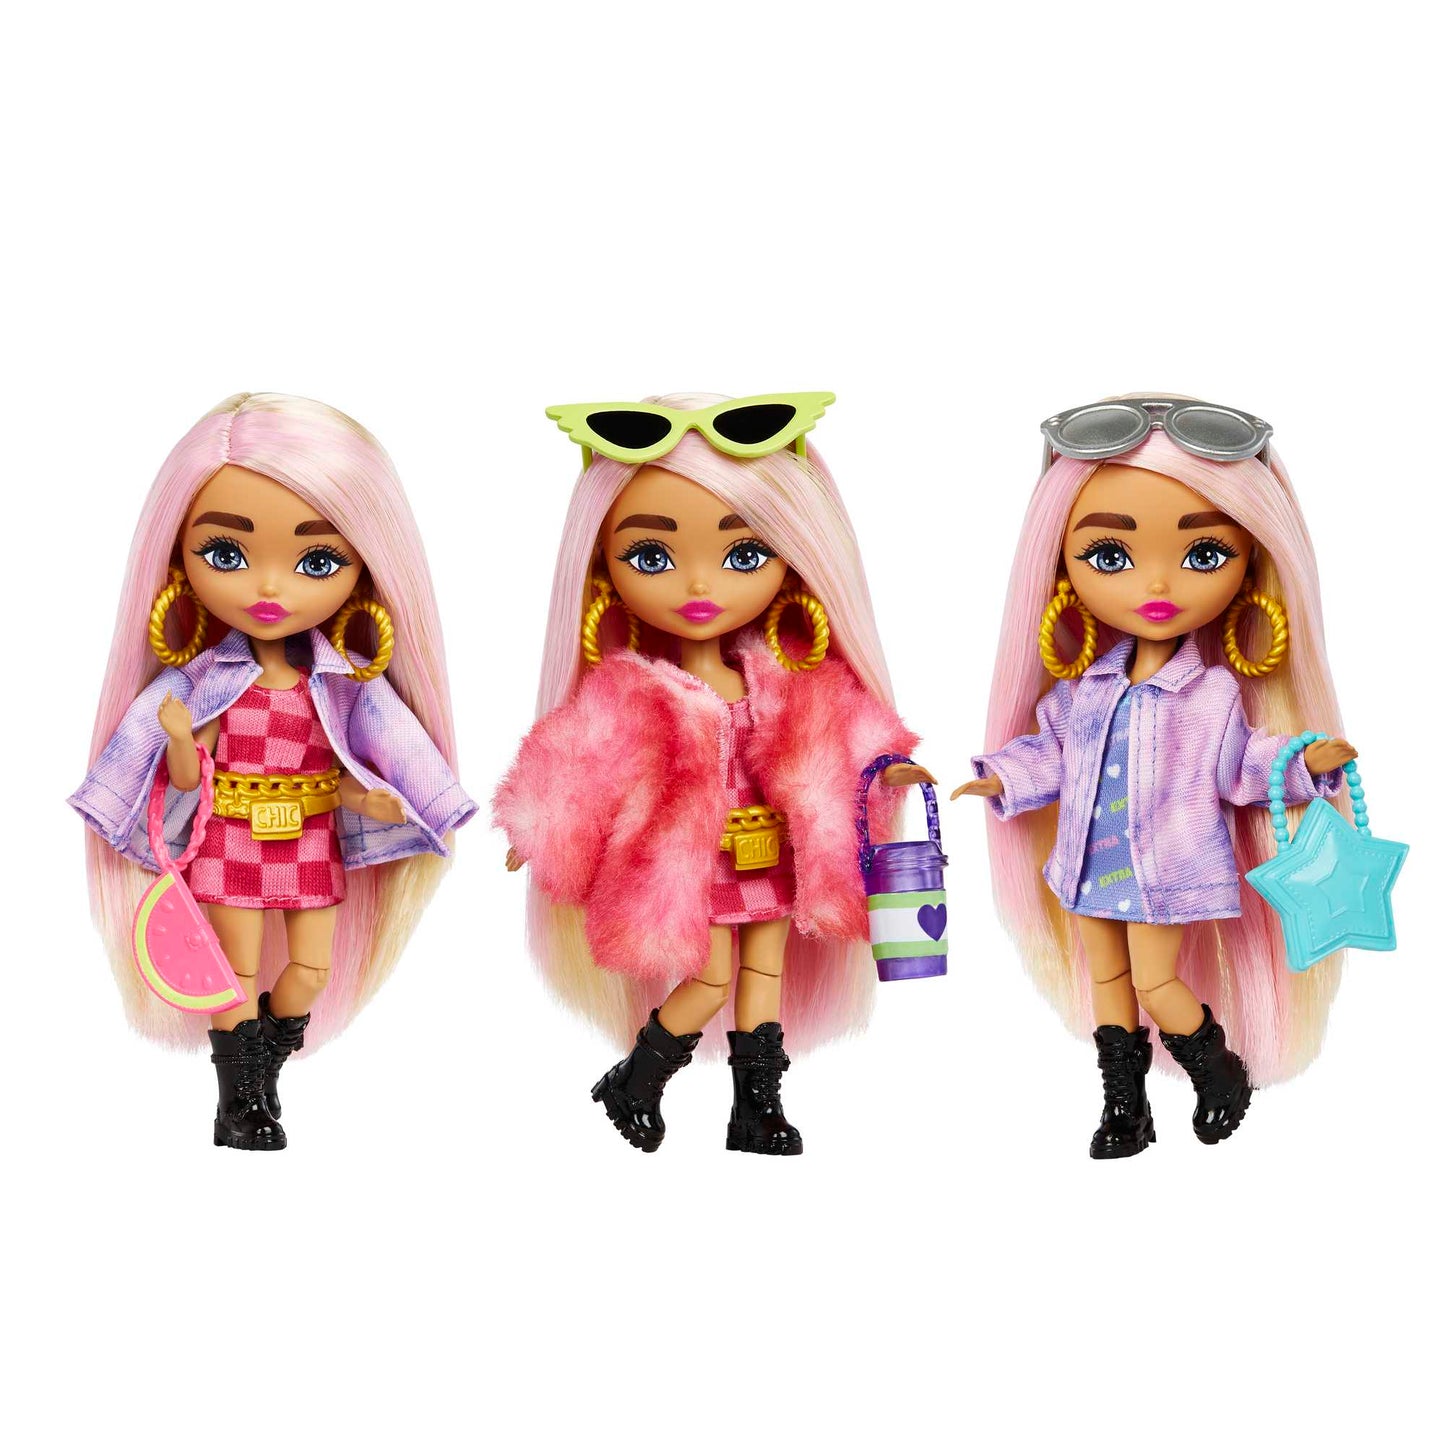 Barbie Extra Minis Boutique